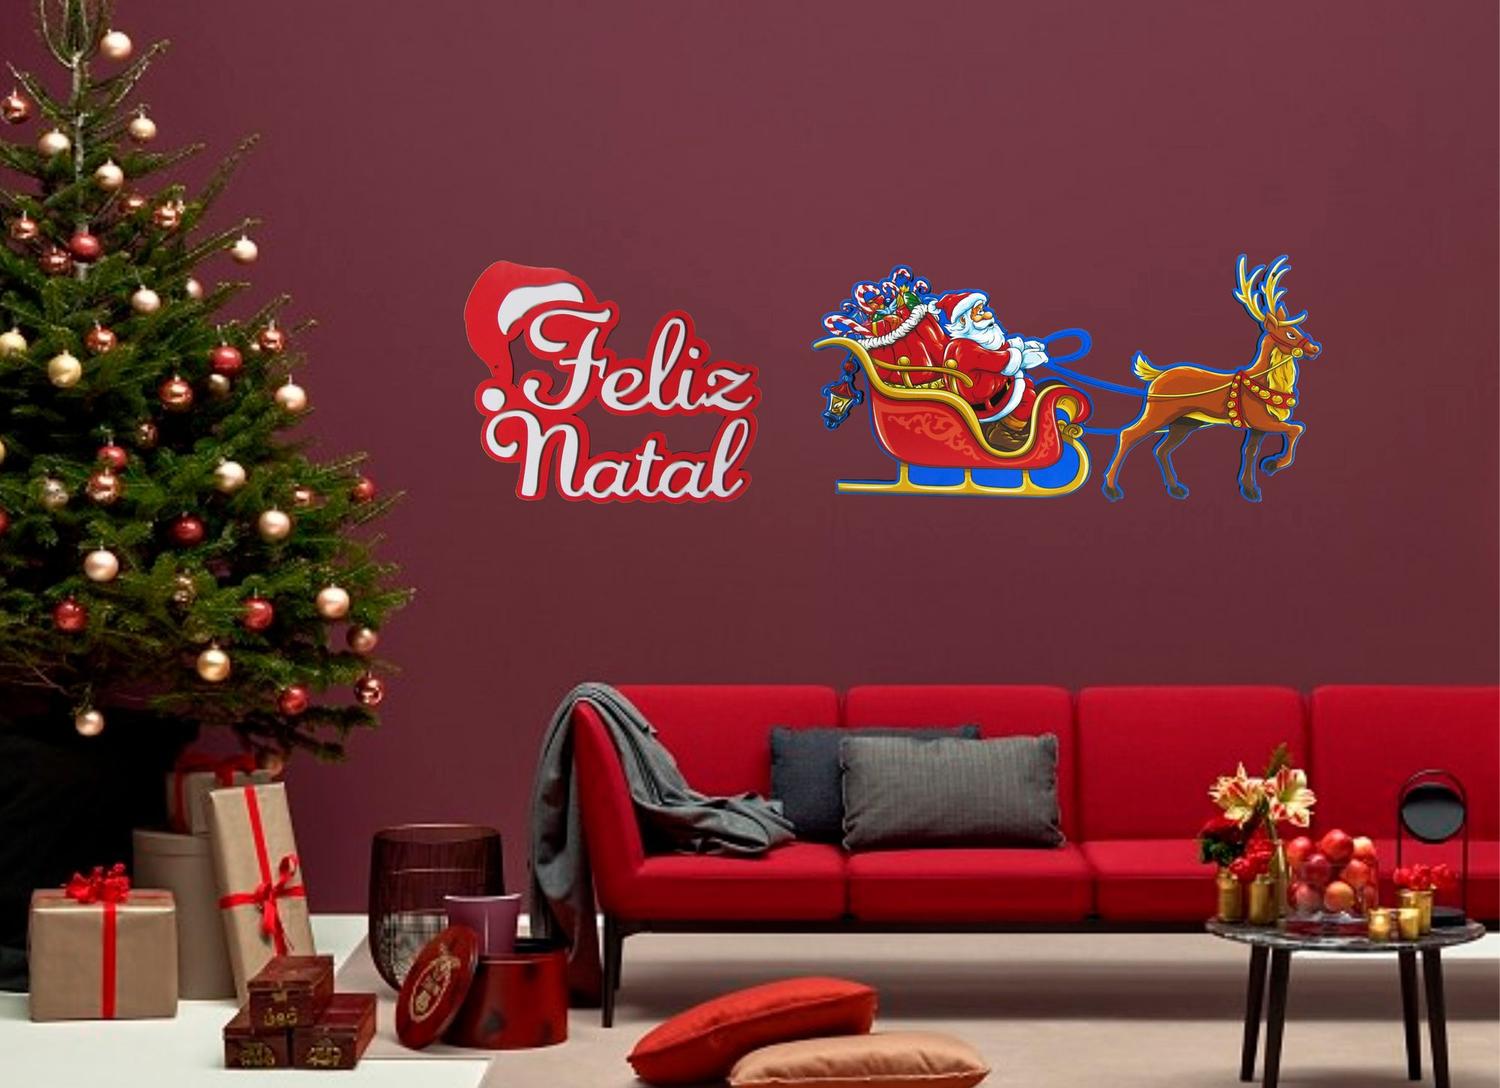 Placa Quadro Decorativo Natal - Ho Ho Ho Papai Noel - Cia Laser